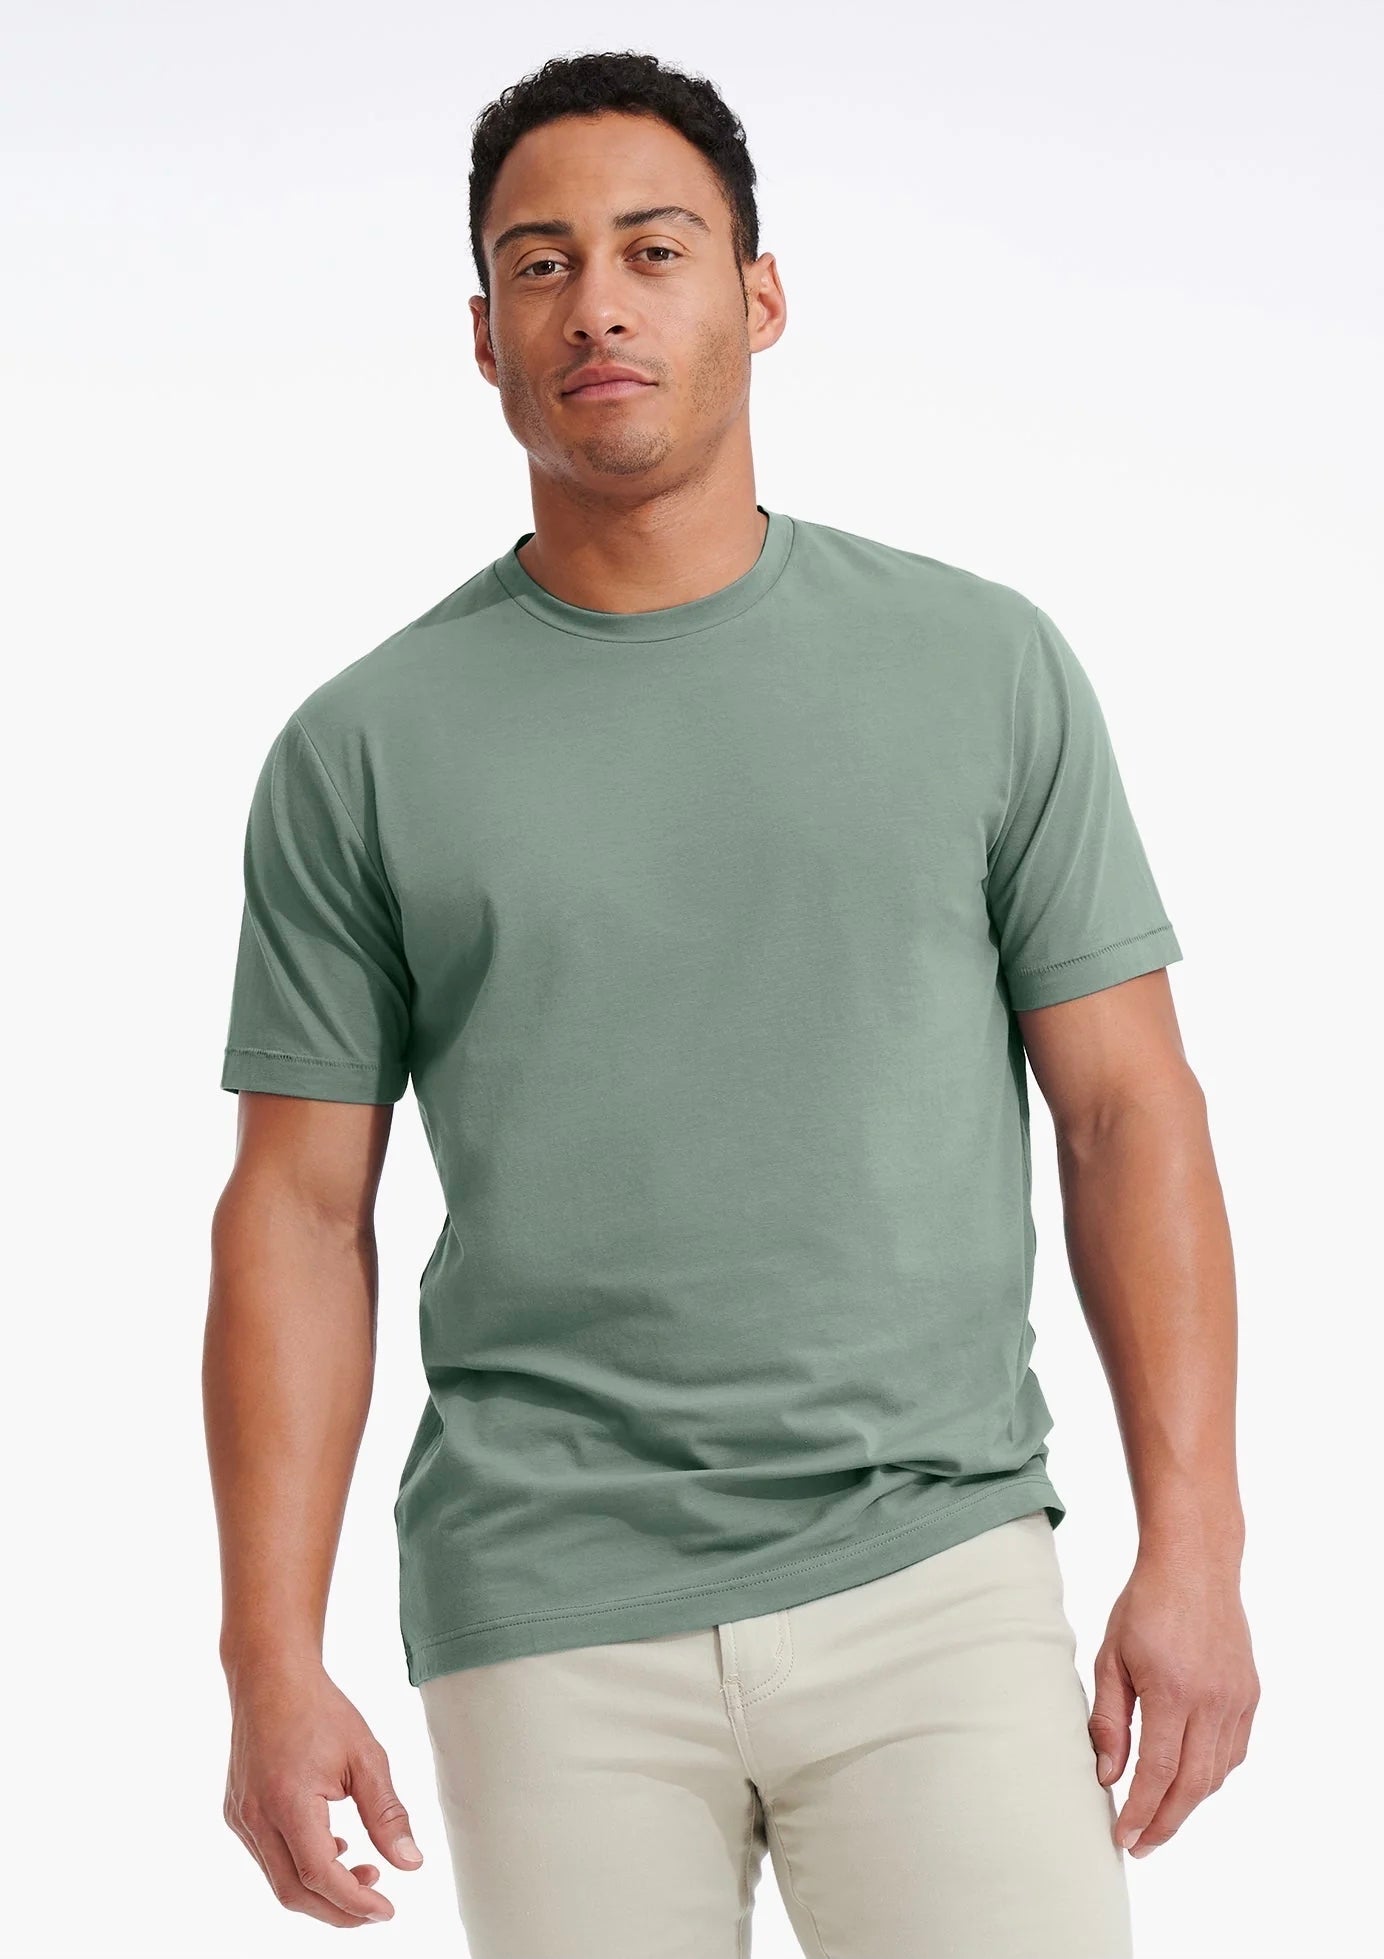 Cotton Stretch T-Shirt Olive